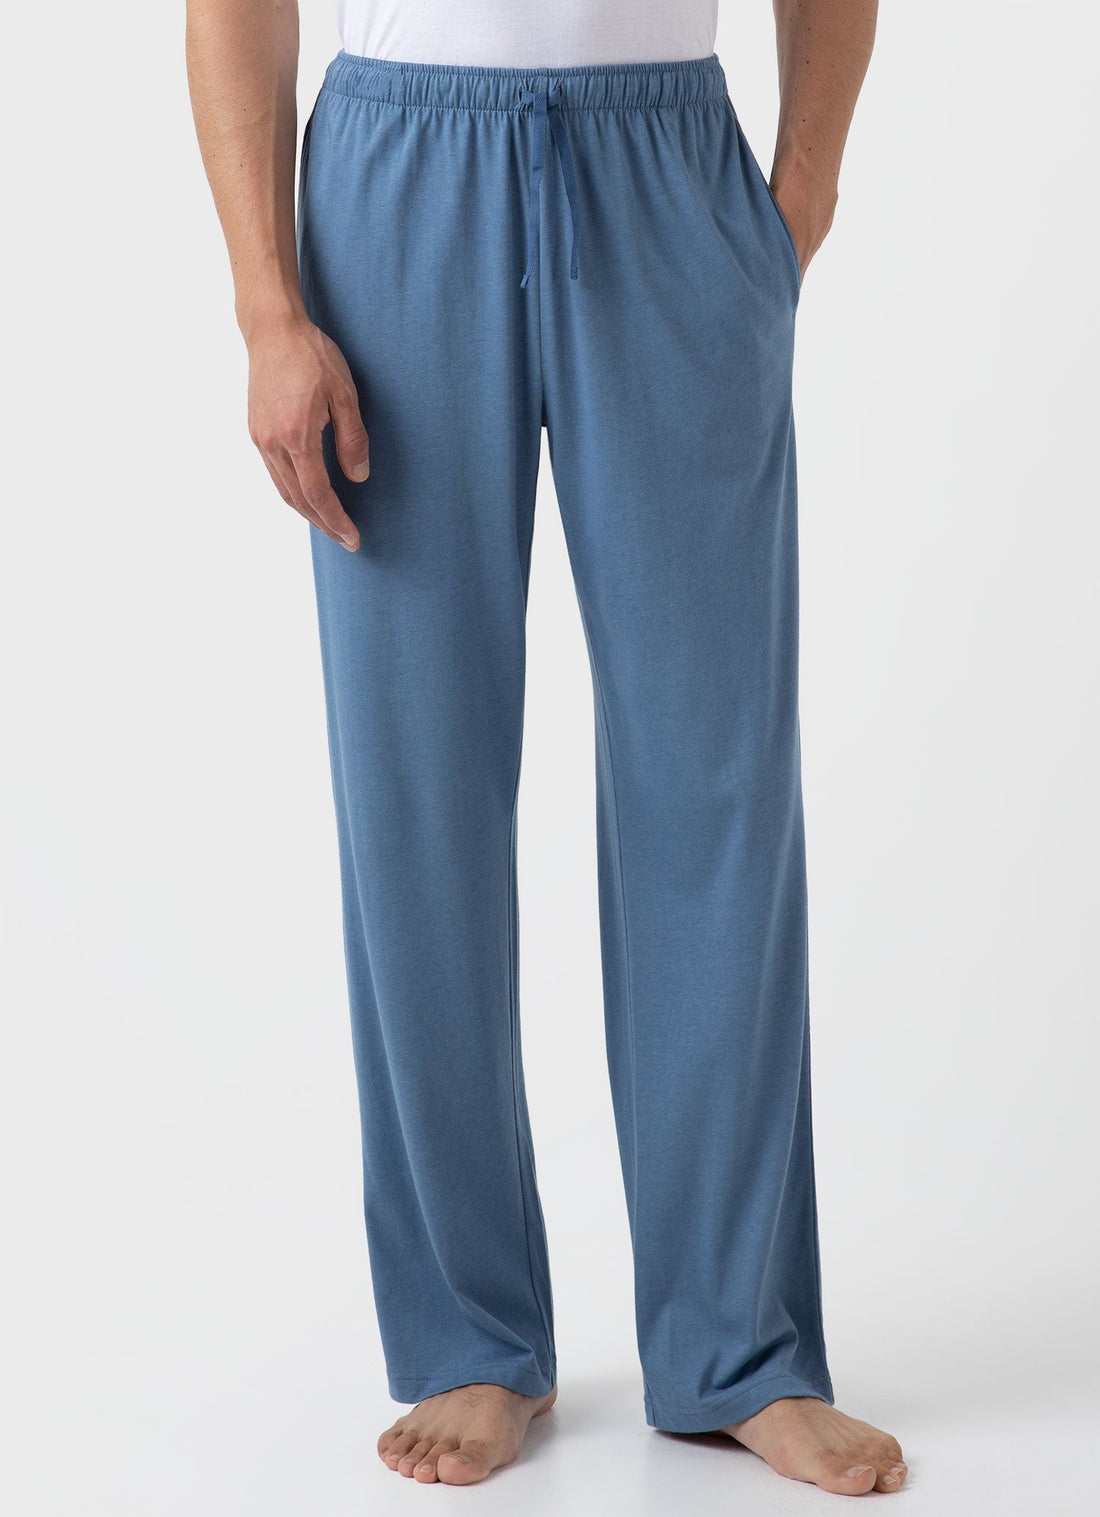 Mens Summer Mesh Shorts, Transparent Sheer Sleep Bottoms, Leisure Home  Wear, S L From Blueberry11, $12.69